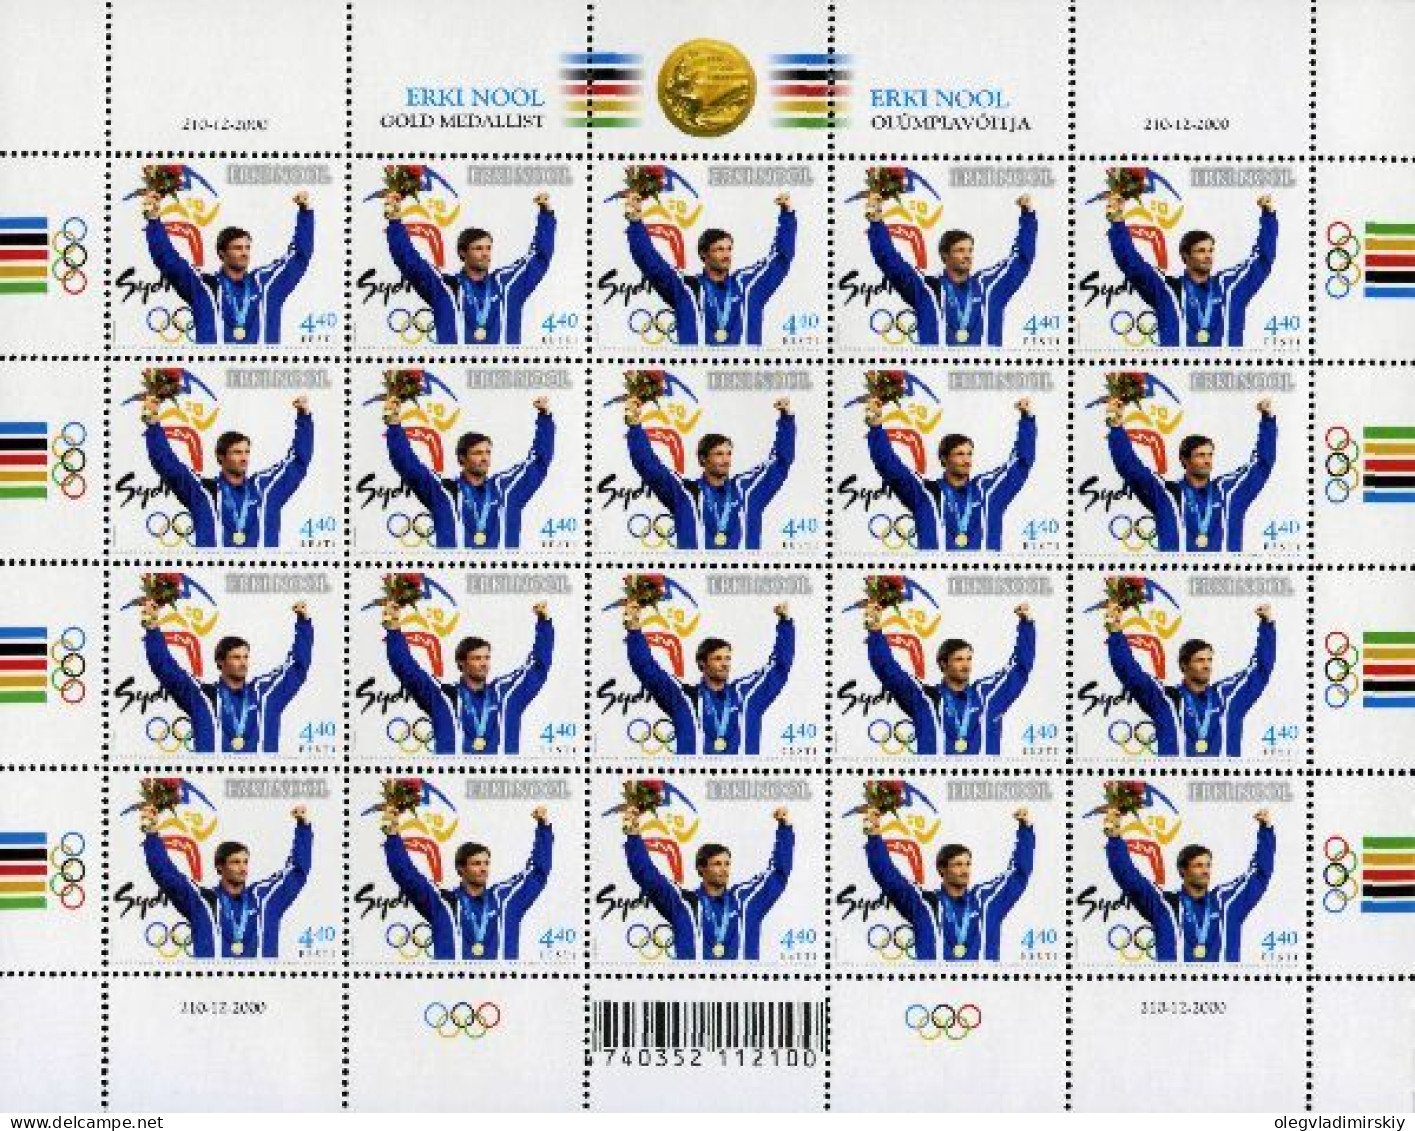 Estonia Estland Estonie 2001 Olympic Champion Erki Nool Sydney Summer Olympics Sheetlet MNH - Estonie